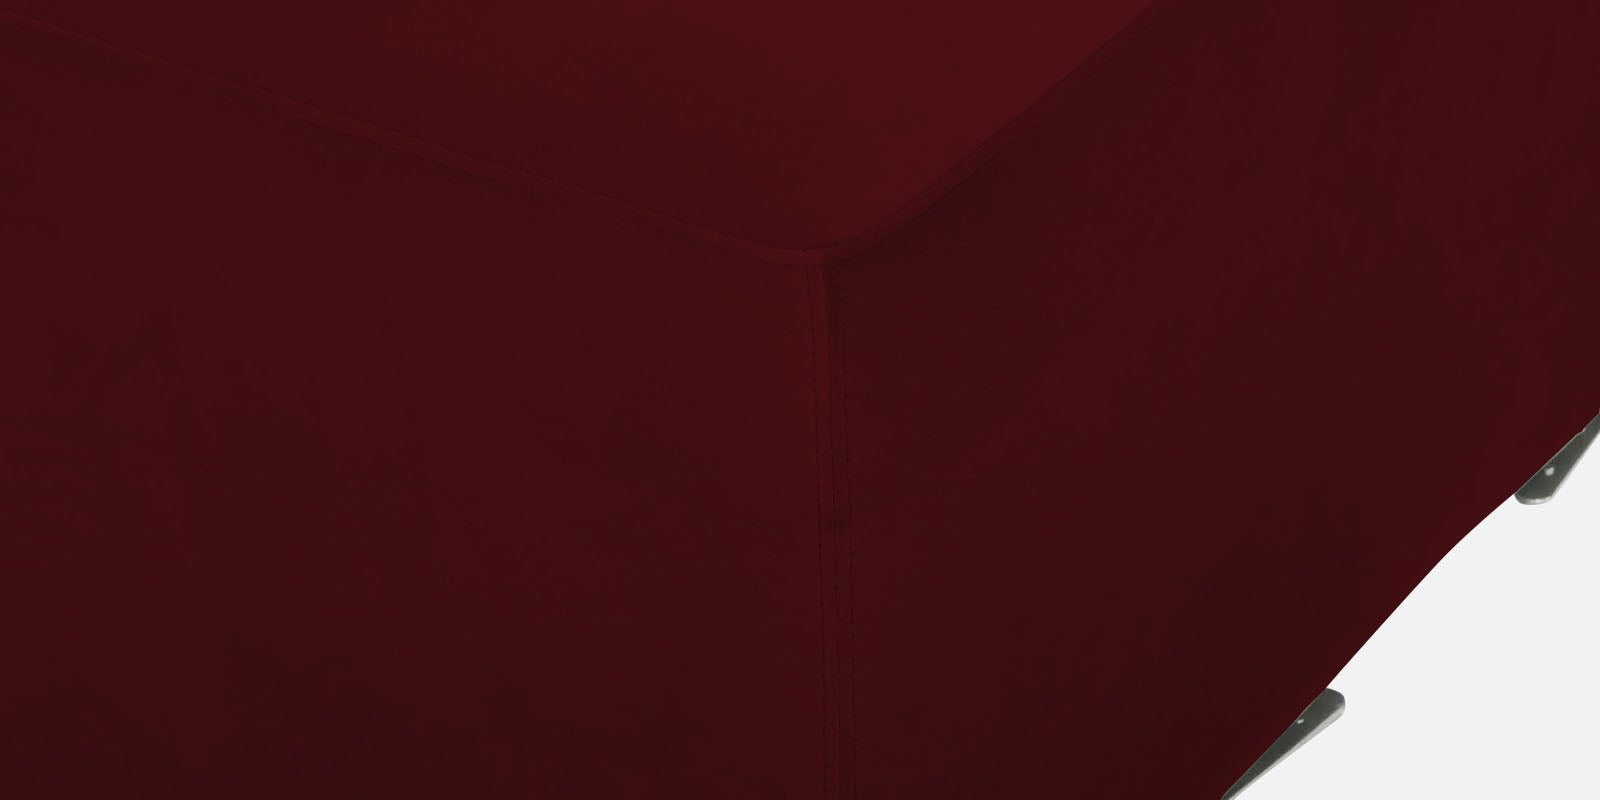 Bufa Velvet 3 Seater Sofa in Dark Maroon Colour